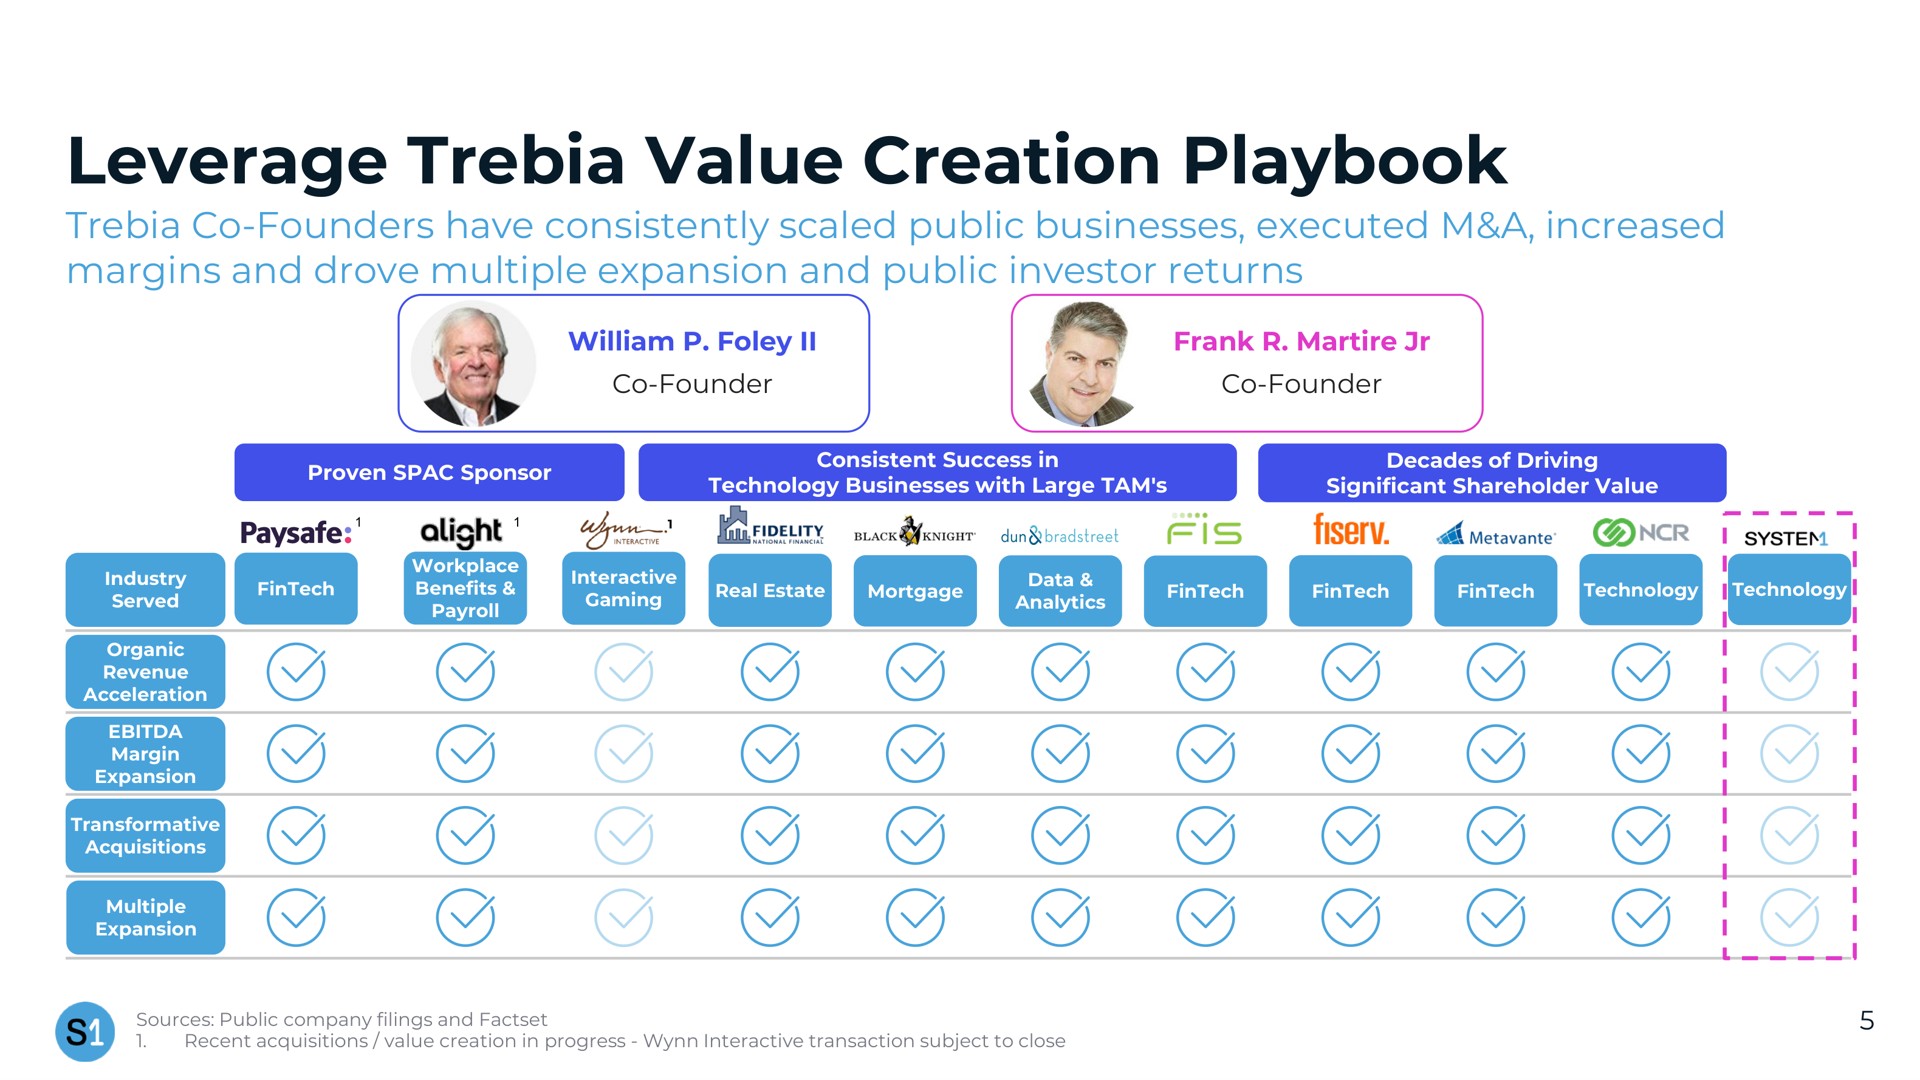 leverage value creation playbook | System1